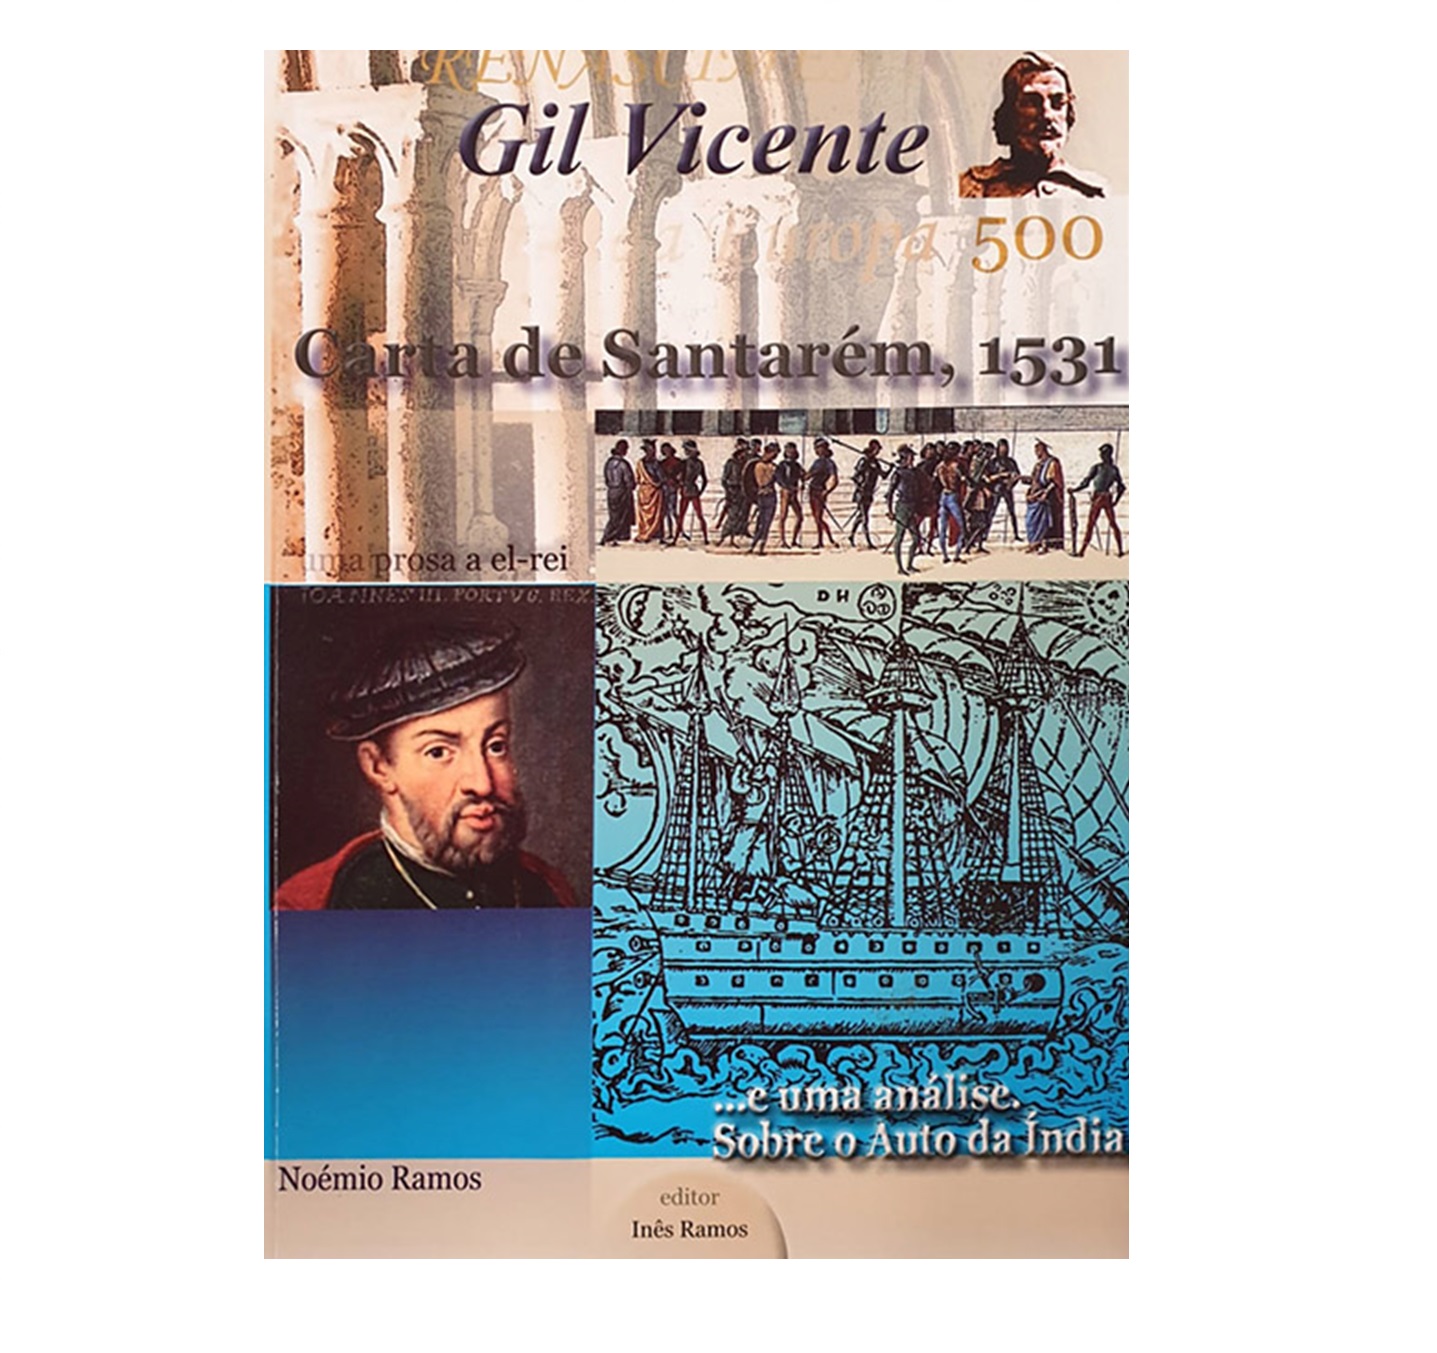 Gil Vicente: carta de Santarém, 1531 e sobre o Auto da Índia